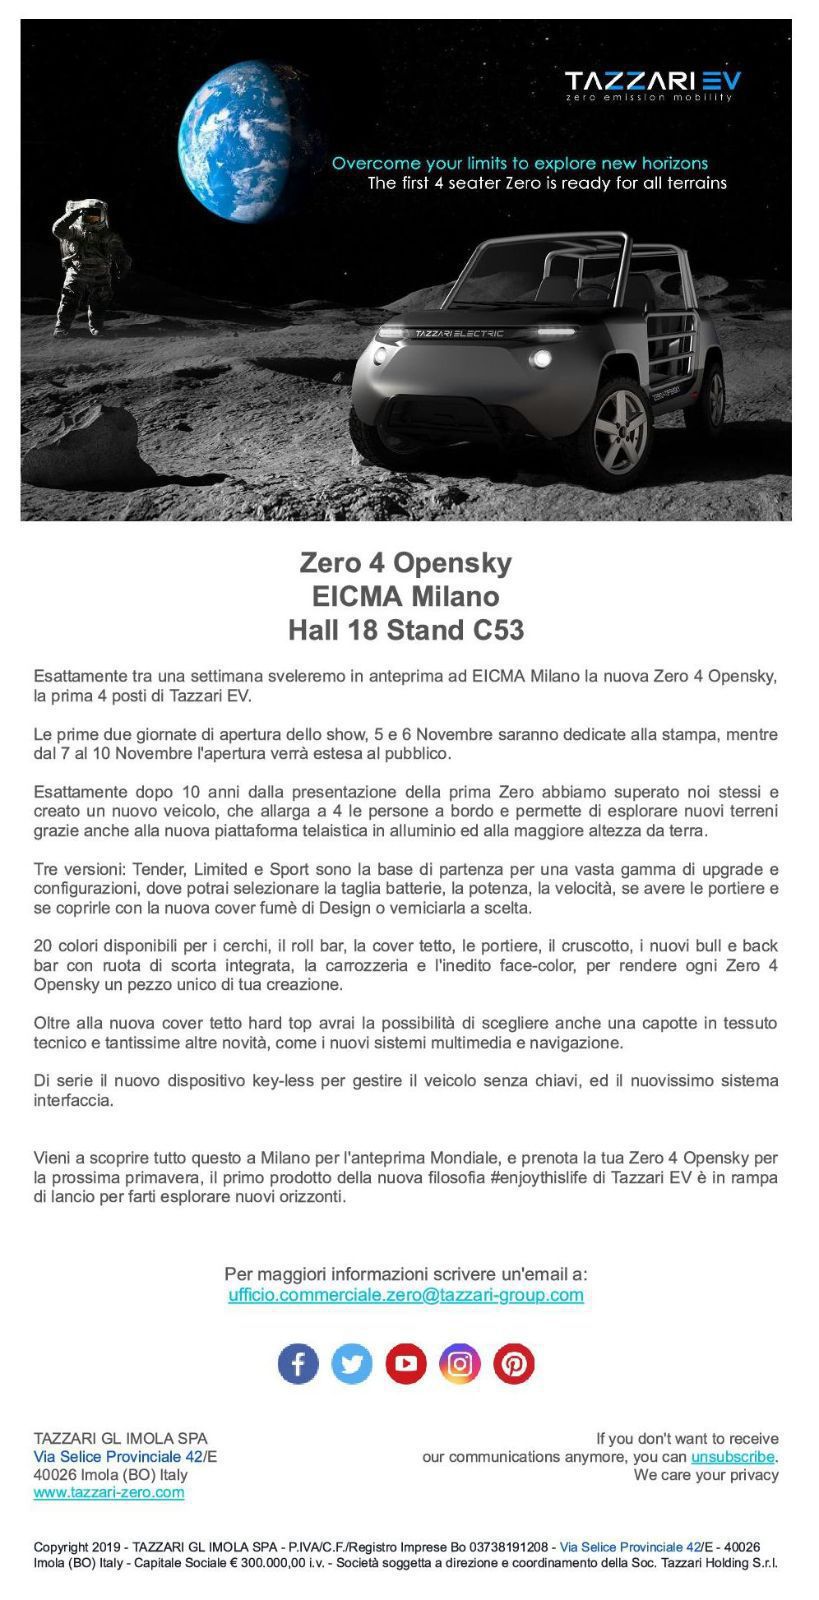 Gmail - Zero 4 Opensky - Anteprima Mond... EICMA Milano 2019 - Hall 18 Stand C53.jpg